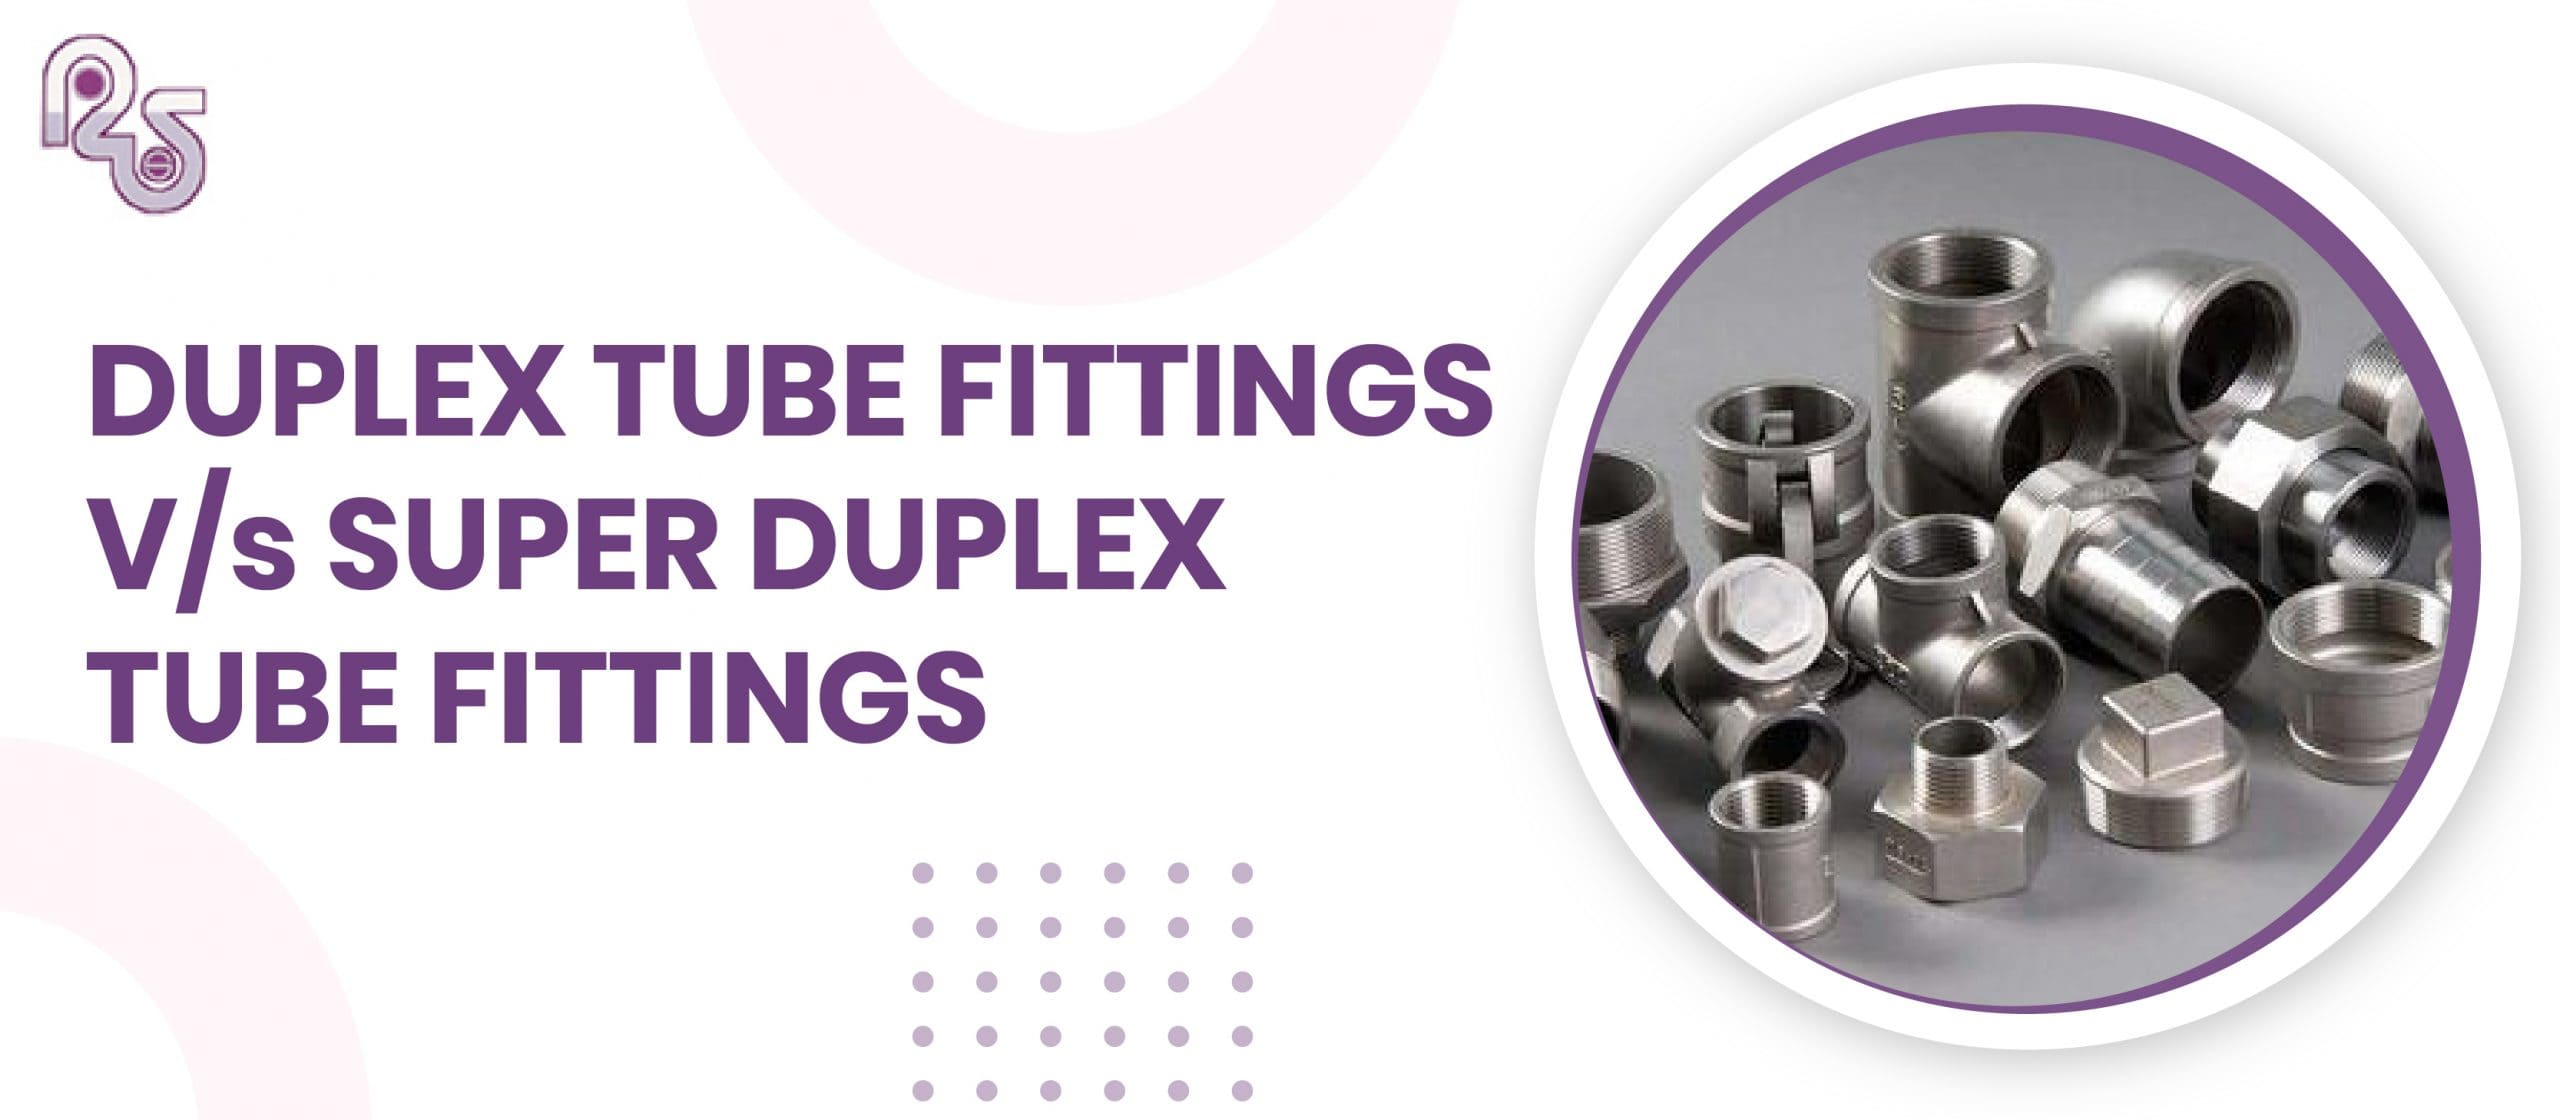 DUPLEX TUBE FITTINGS Vs SUPER DUPLEX TUBE FITTINGS